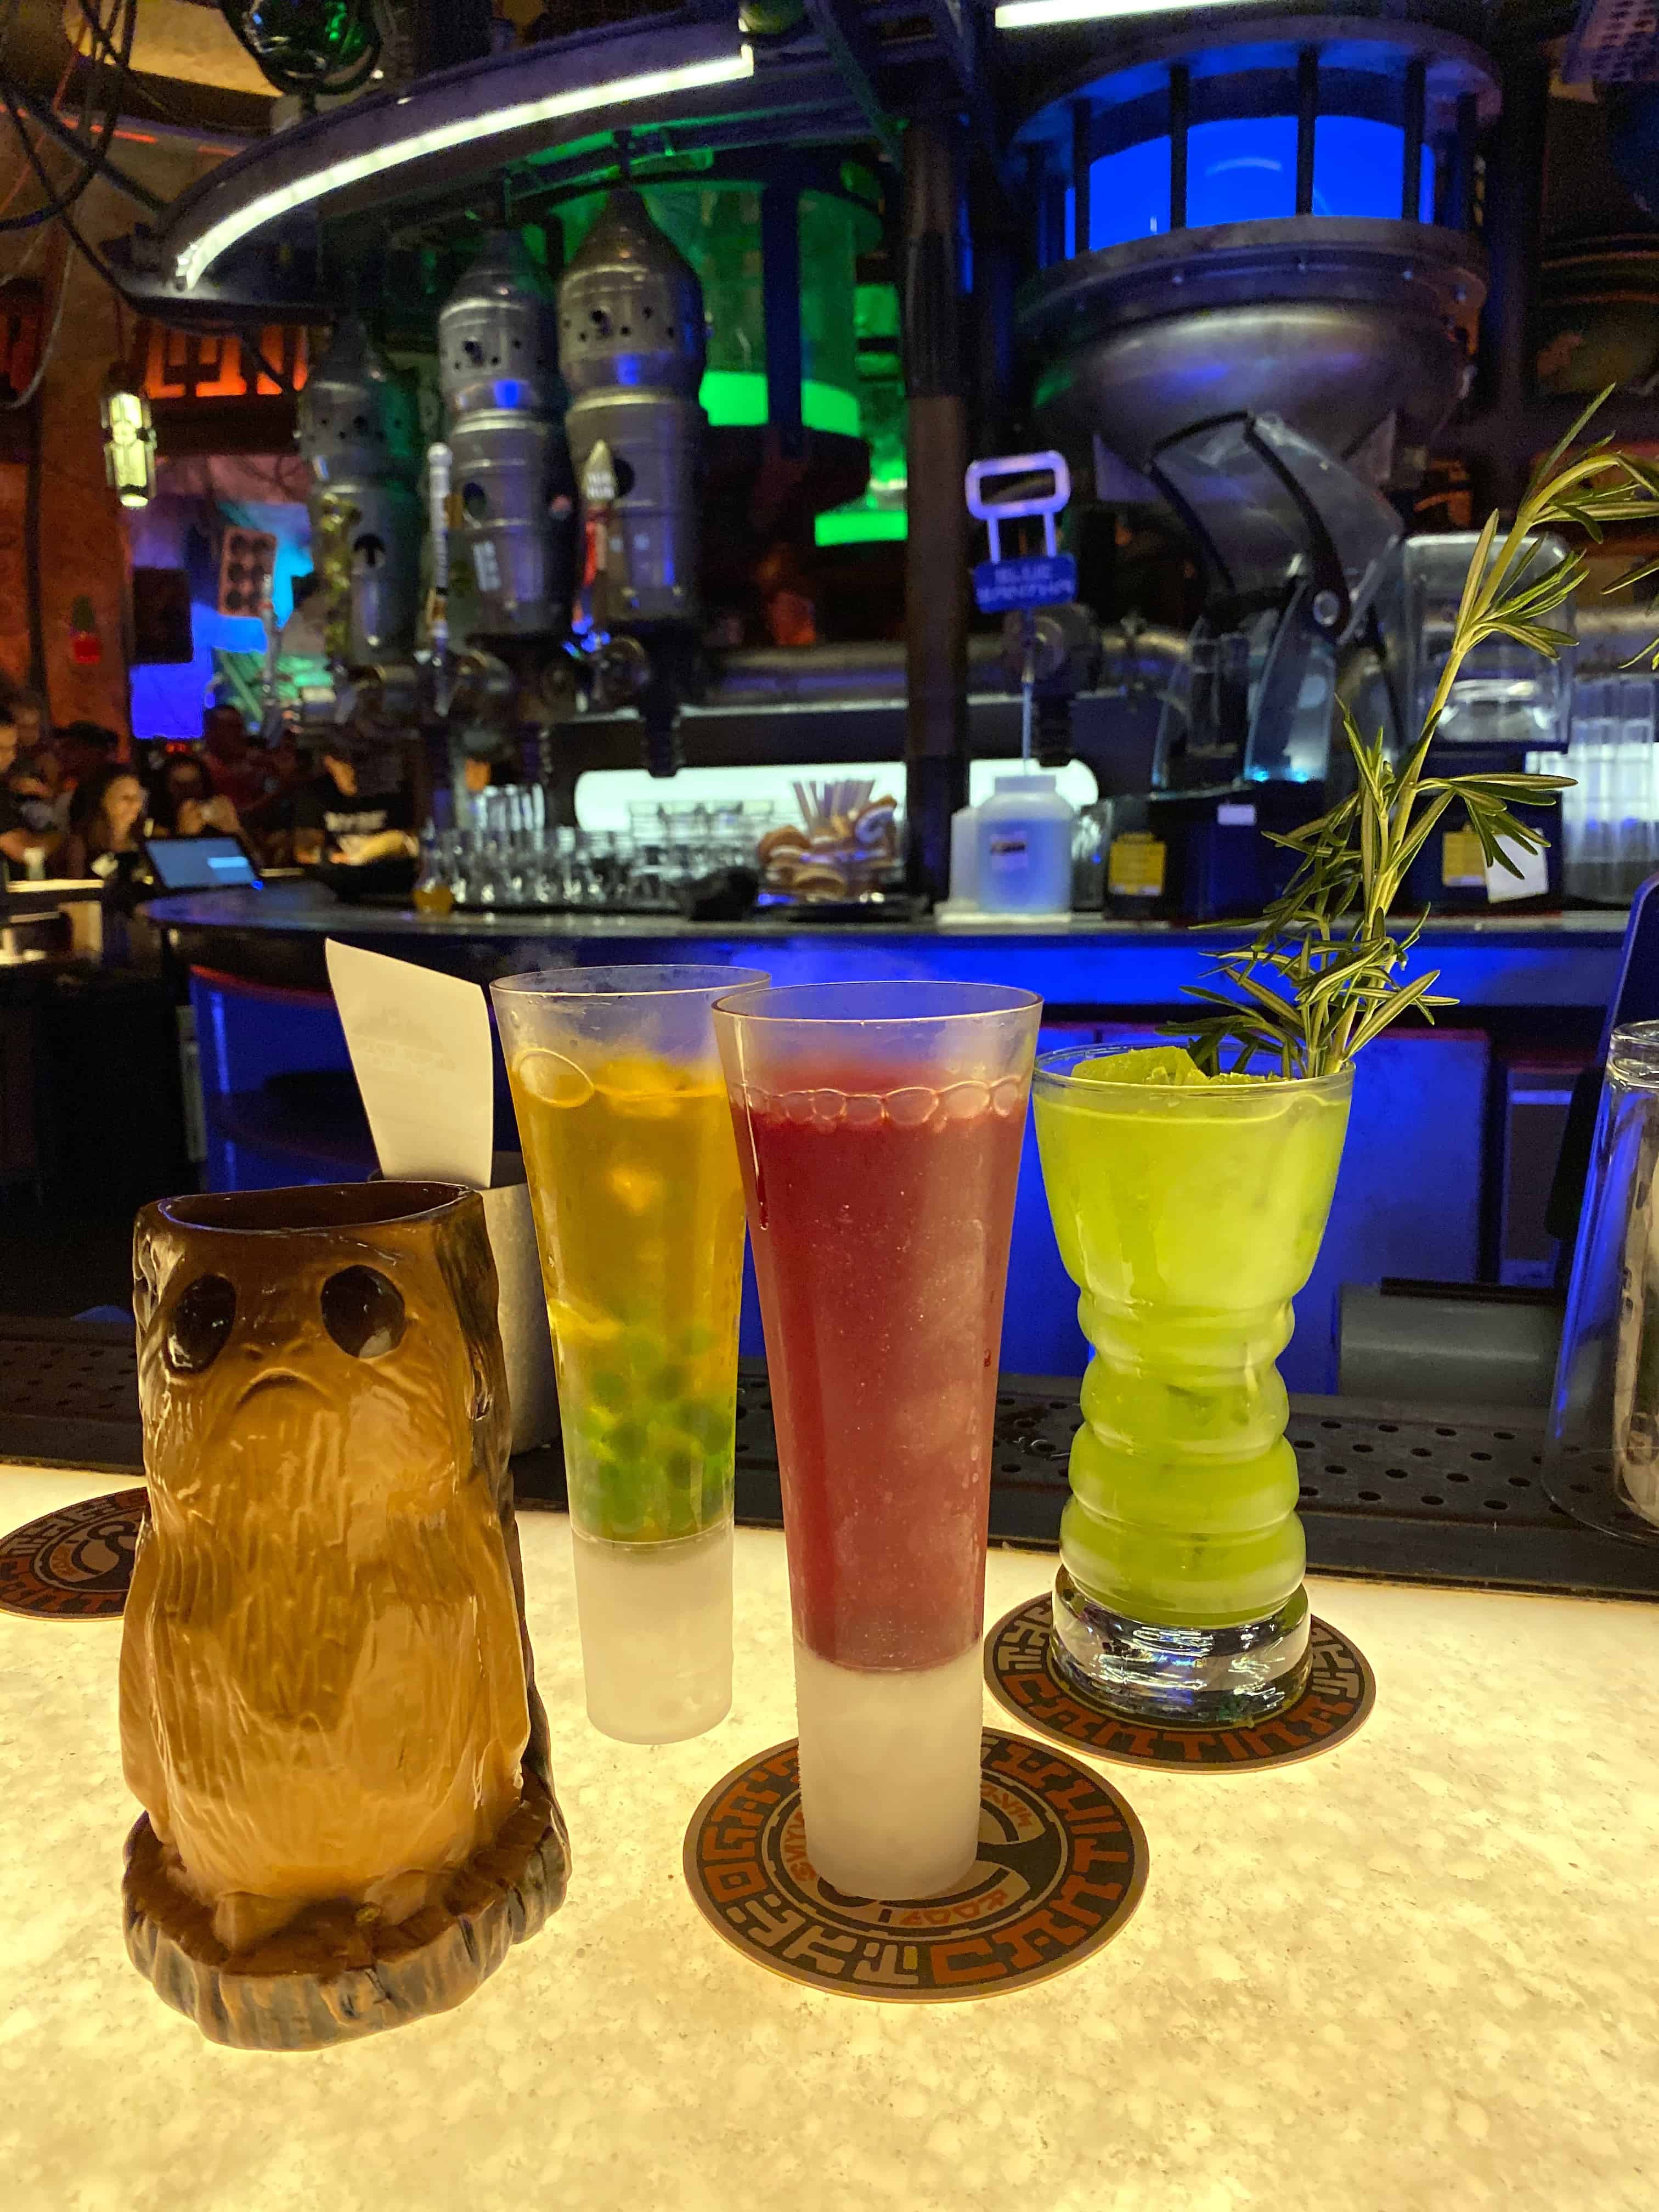 Review: Oga's Cantina Bar in Star Wars Land - Disney Tourist Blog